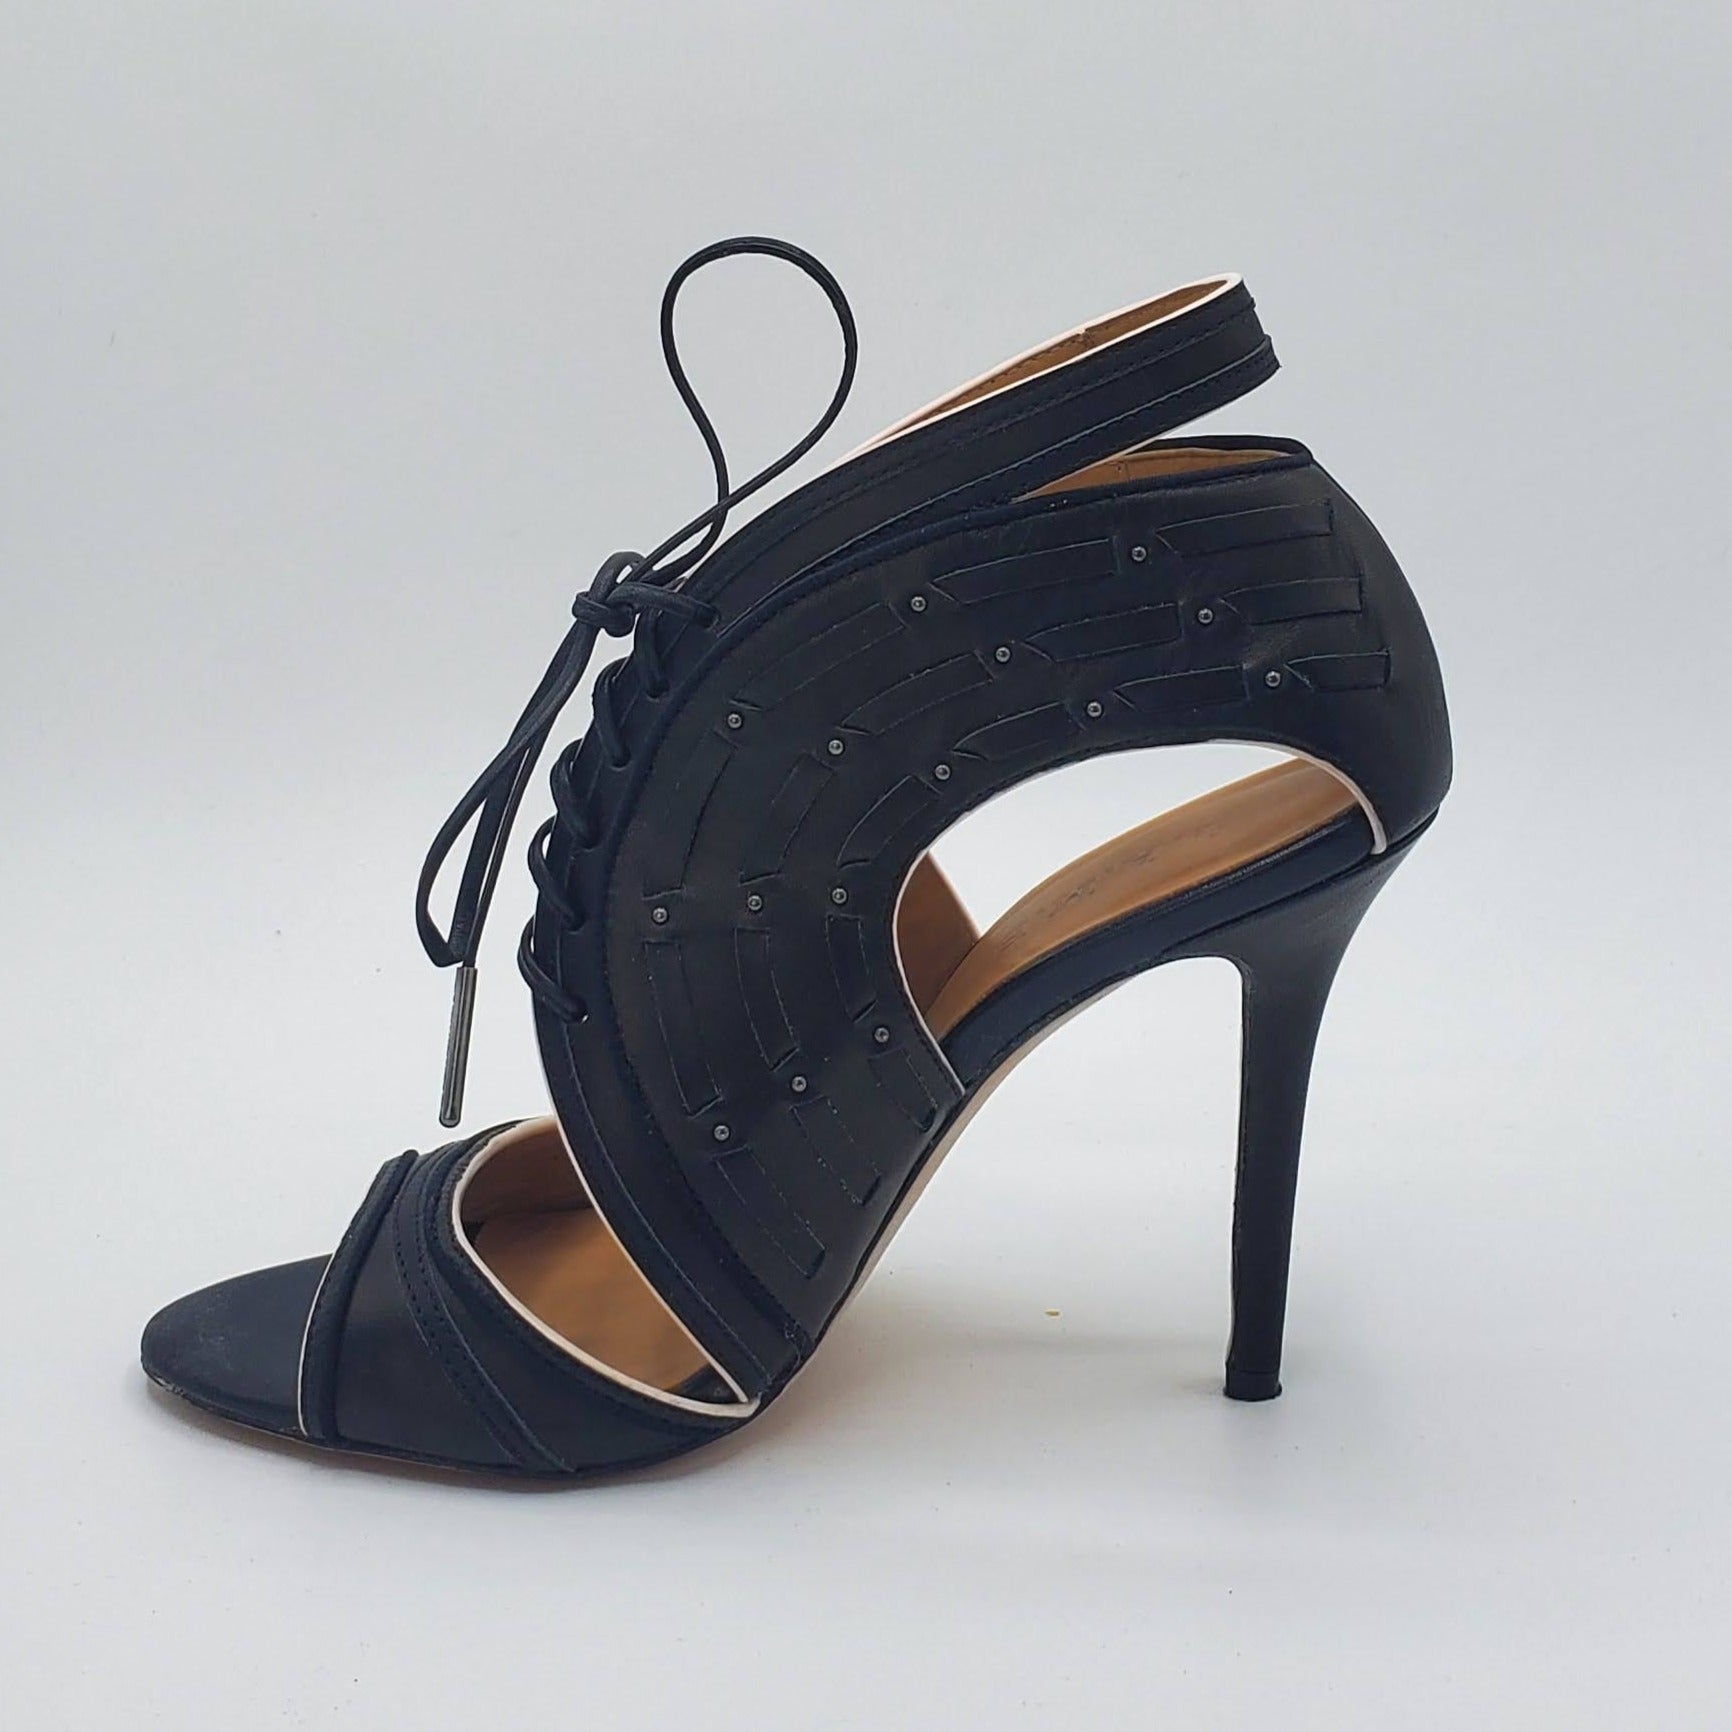 Women's High Heels Black/Beige Sandals with Laces